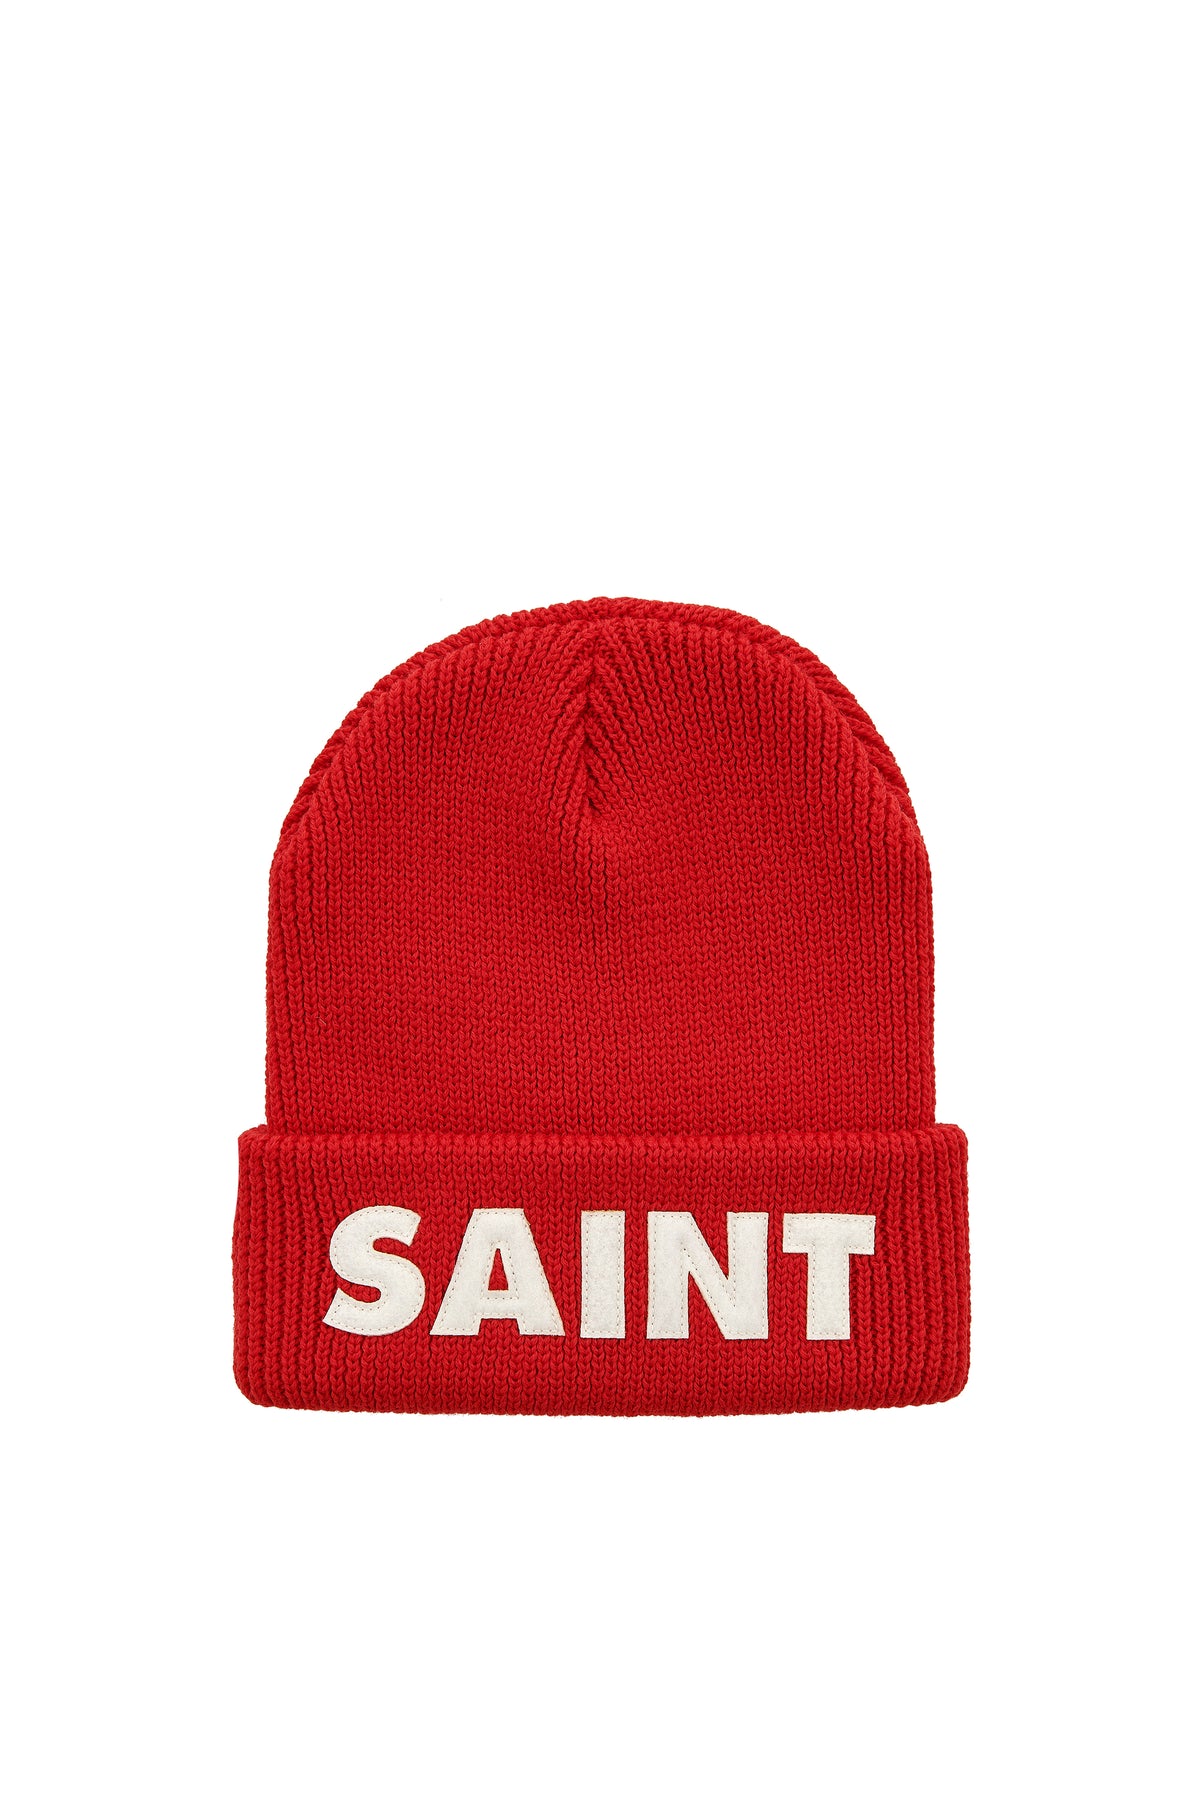 SAINT Mxxxxxx KNIT CAP/SAINT / RED